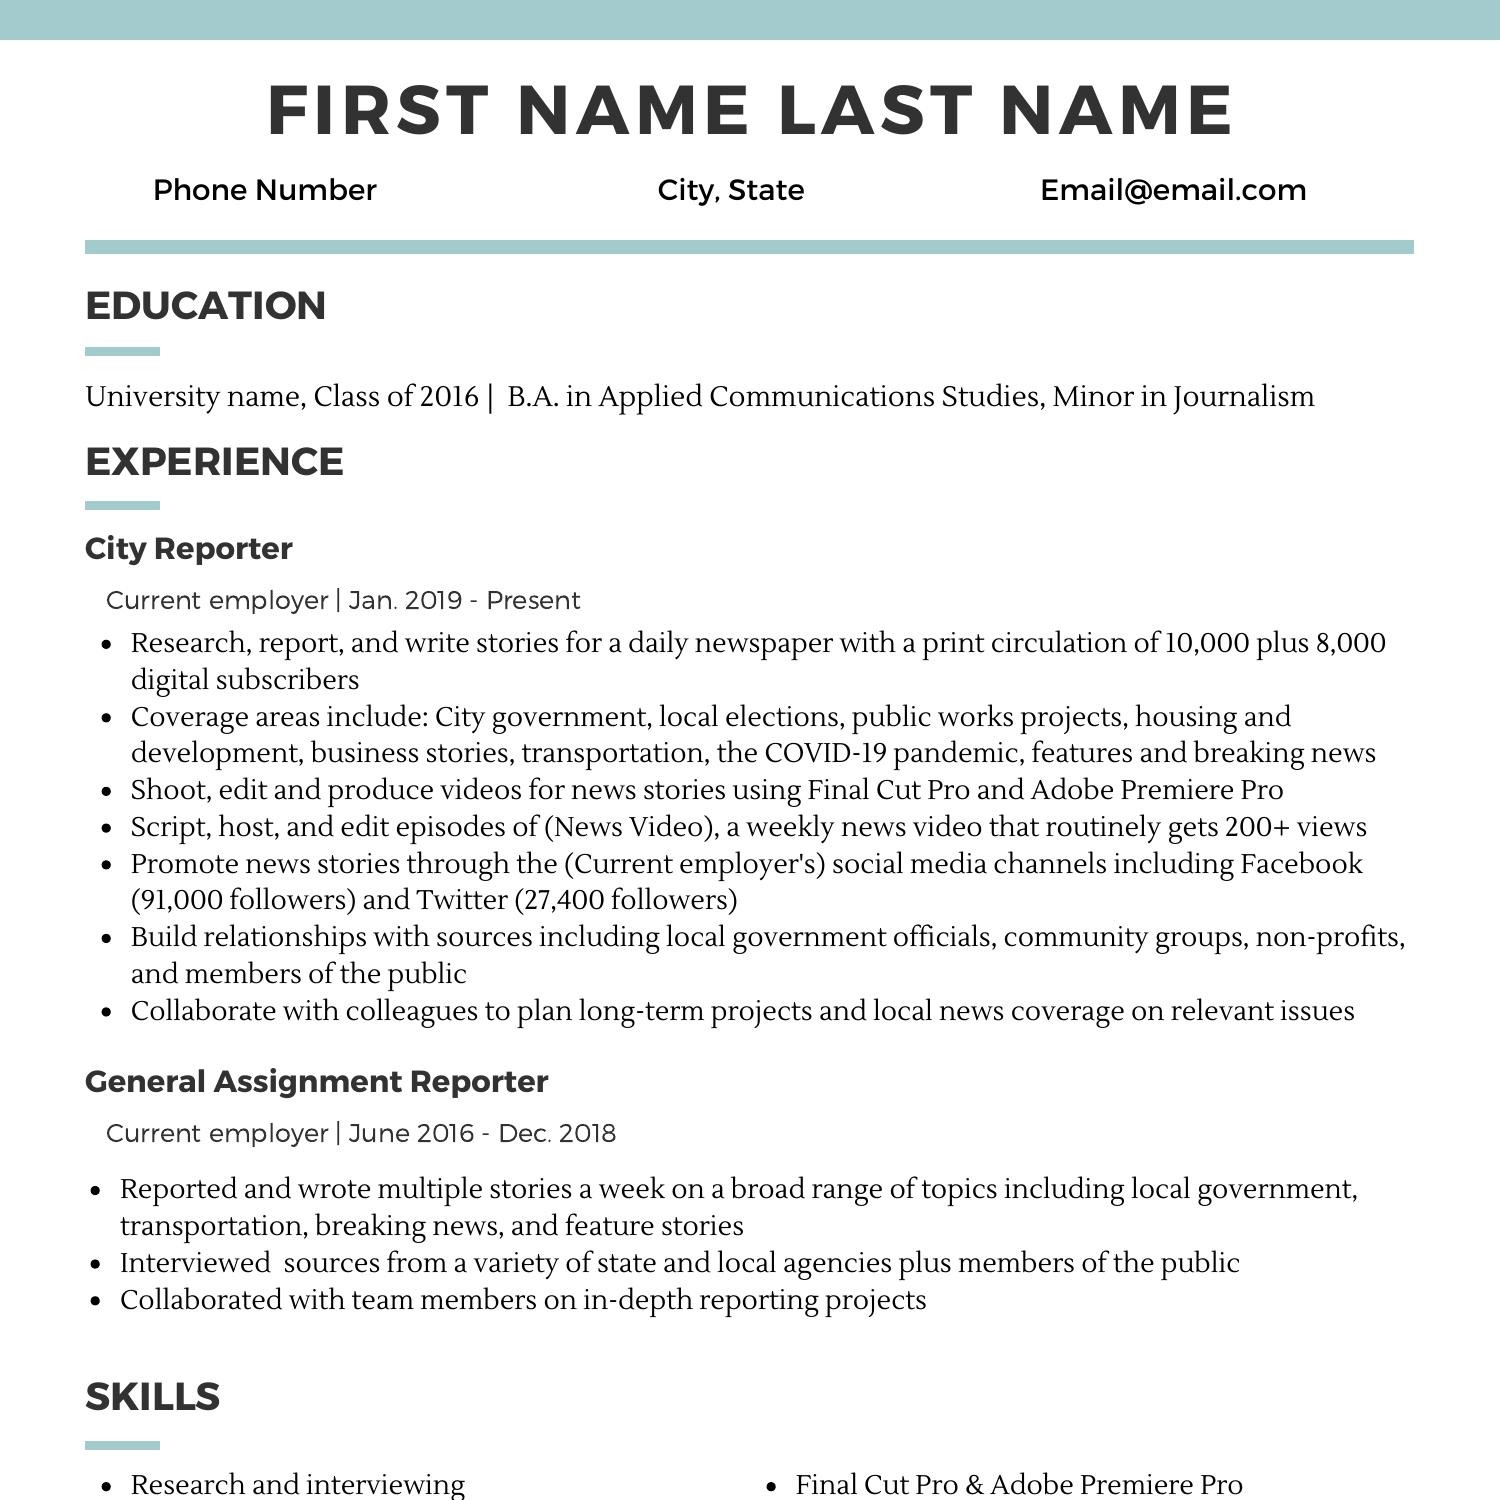 pdf resume maker